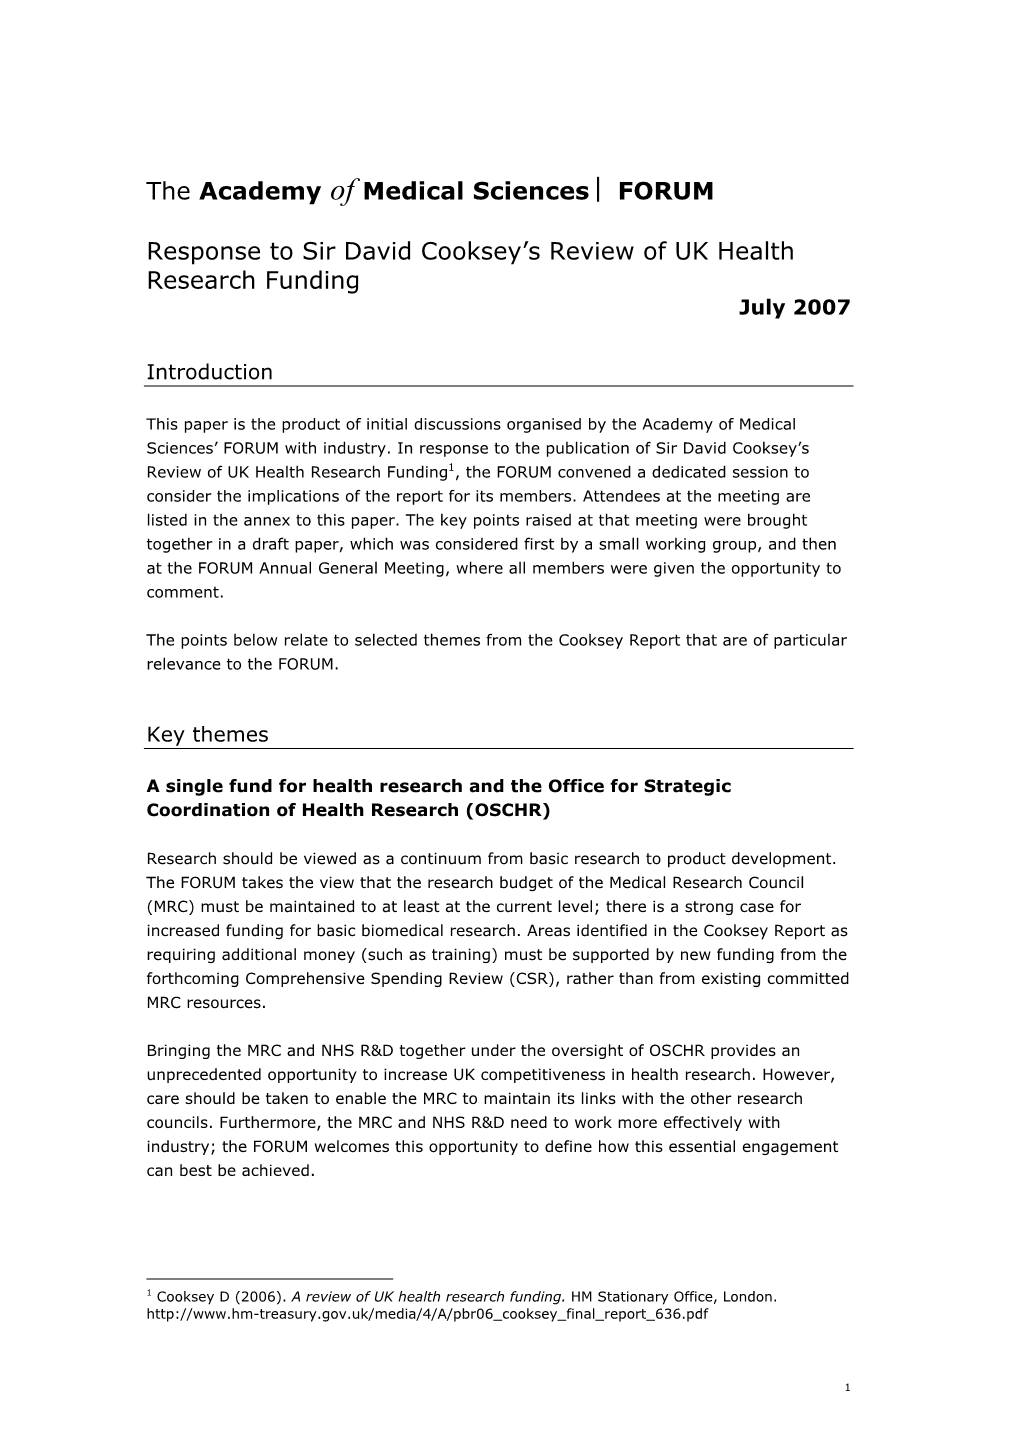 Response to Sir David Cooksey's